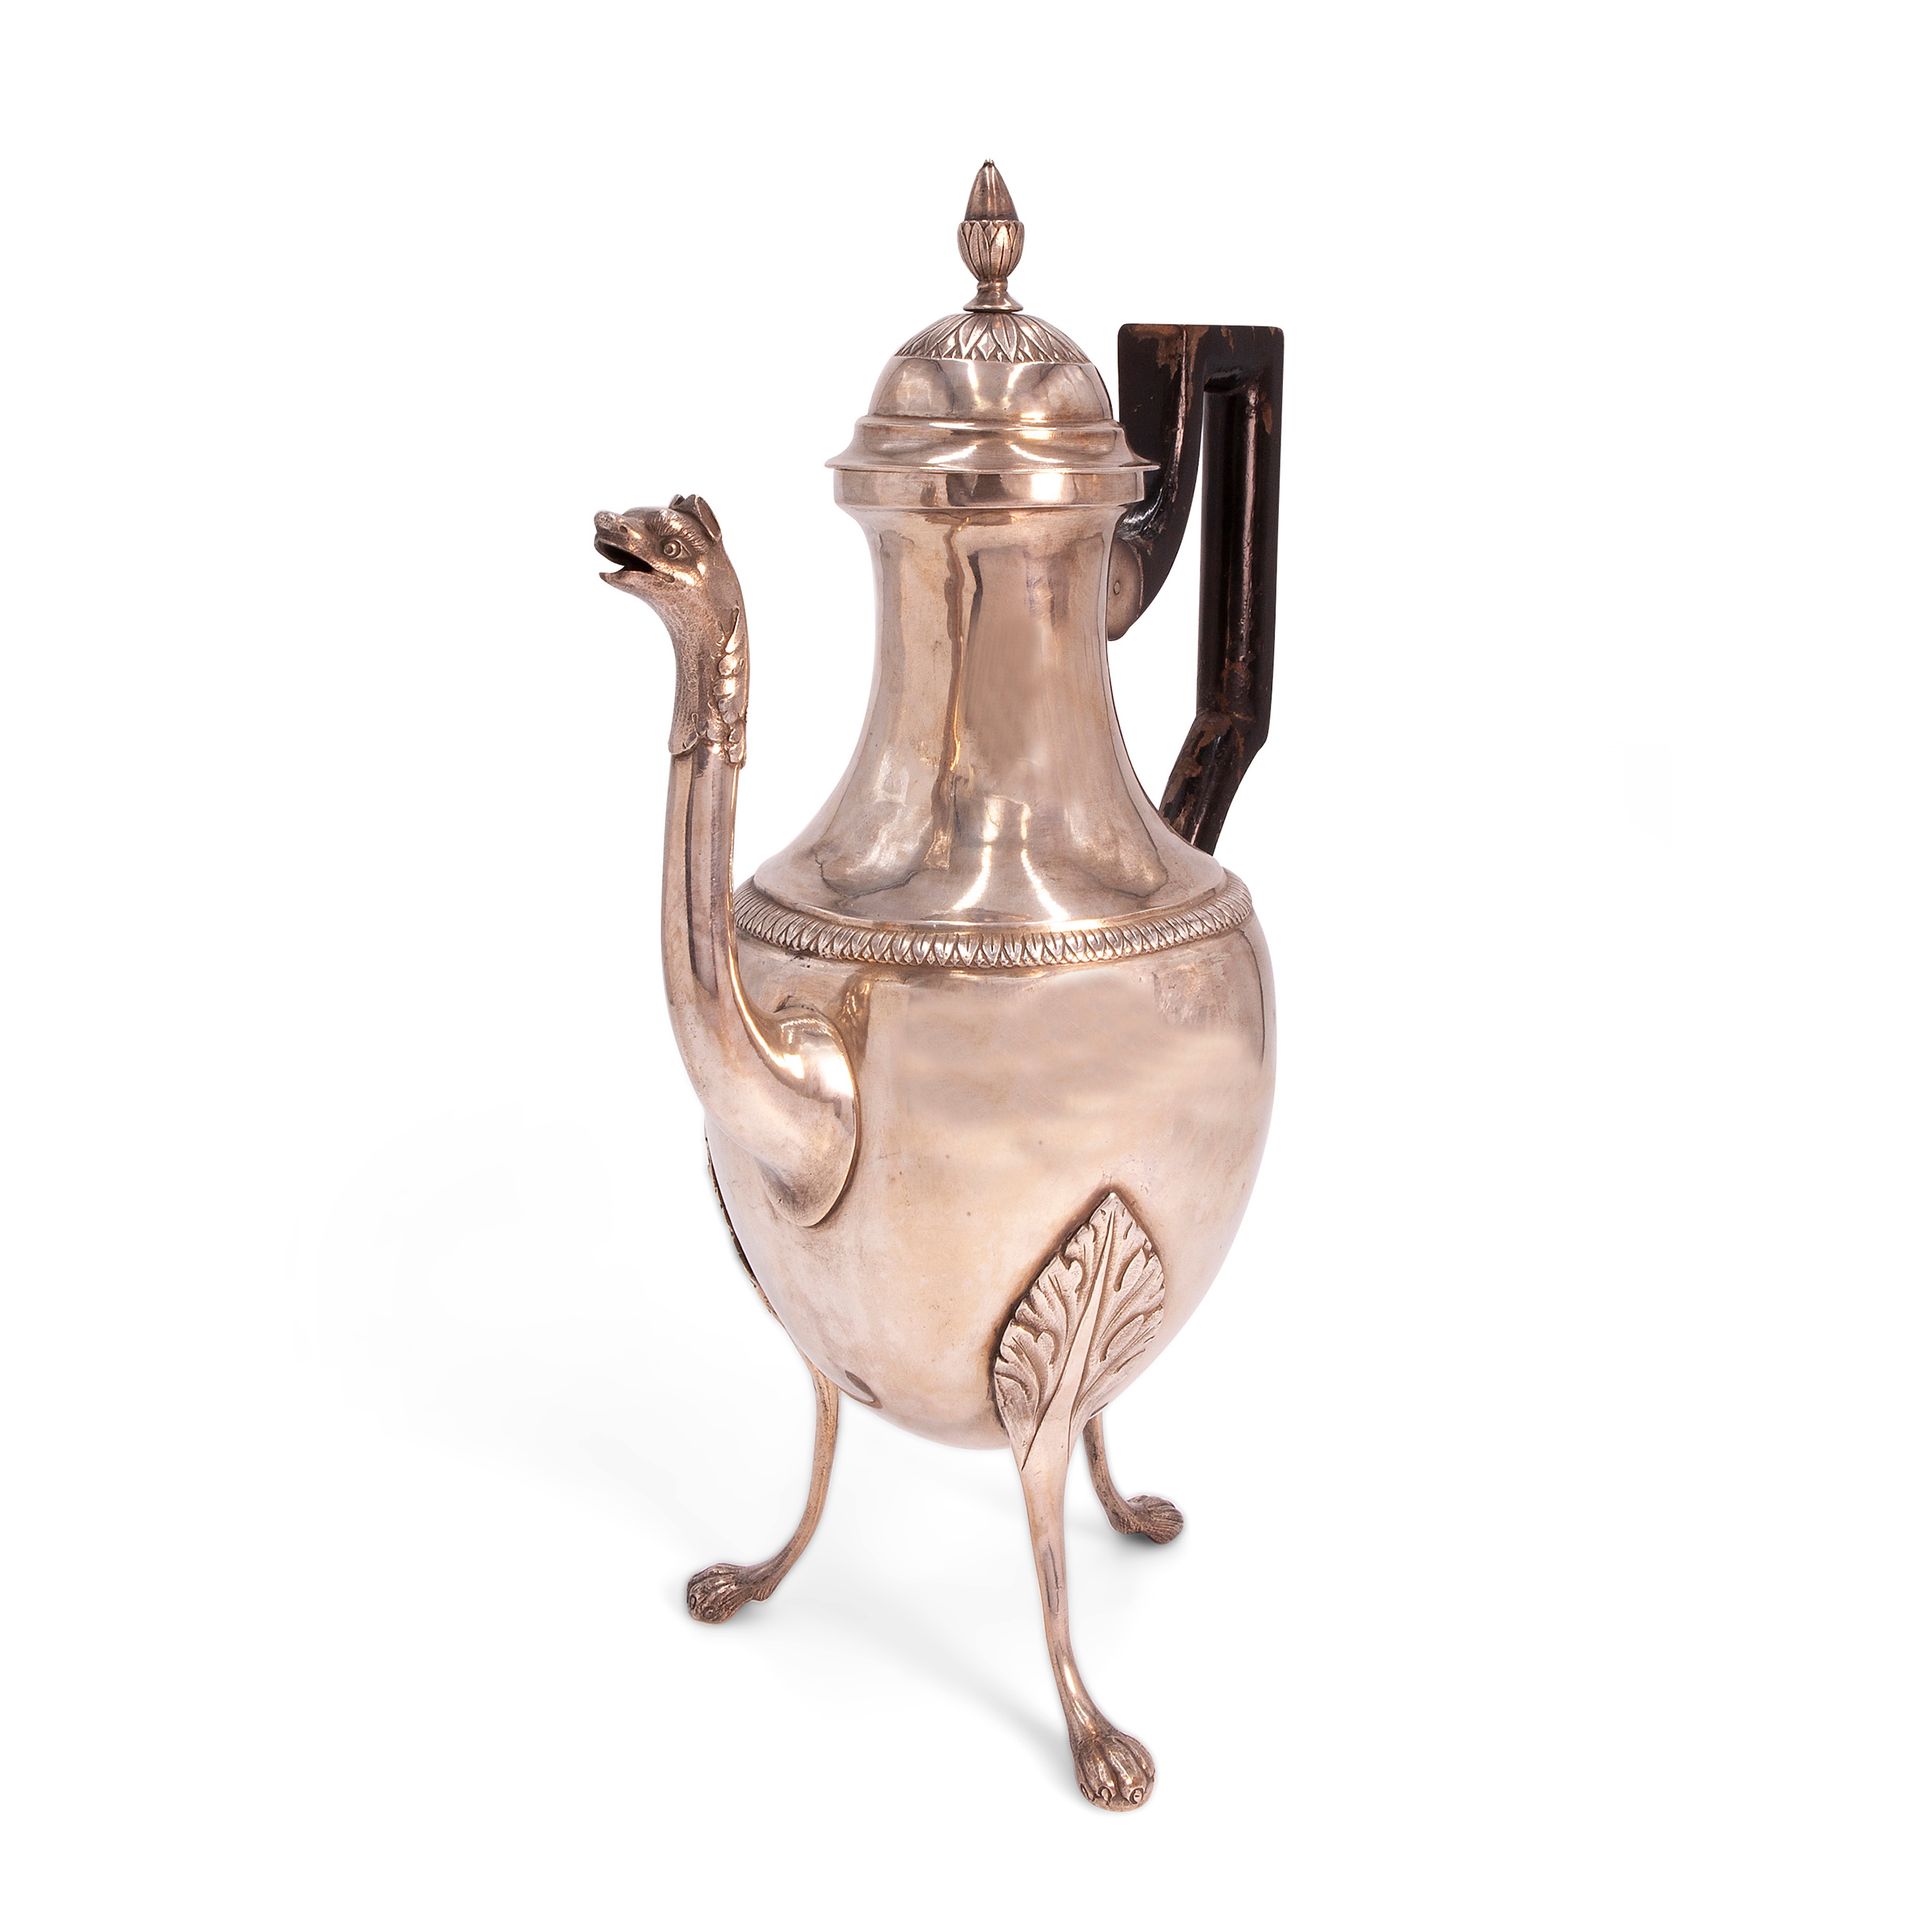 Genoese silver coffee pot 带有Torretta标记，新古典主义时期 总重量33.5盎司，13.1x9x5.5英寸。